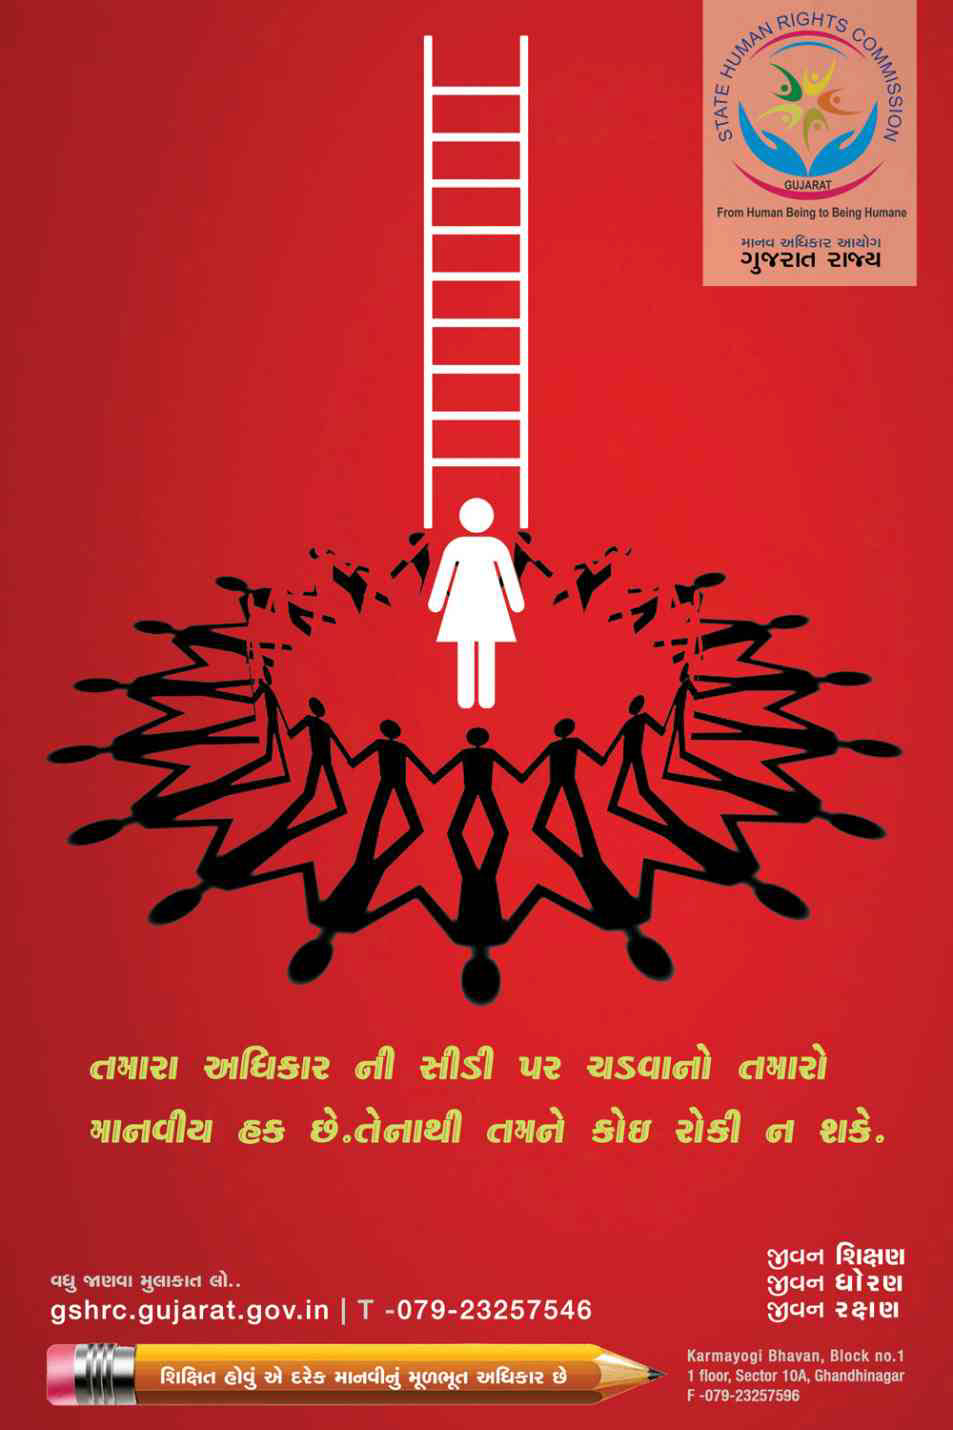 ahmedabad India Human rights adversting poster